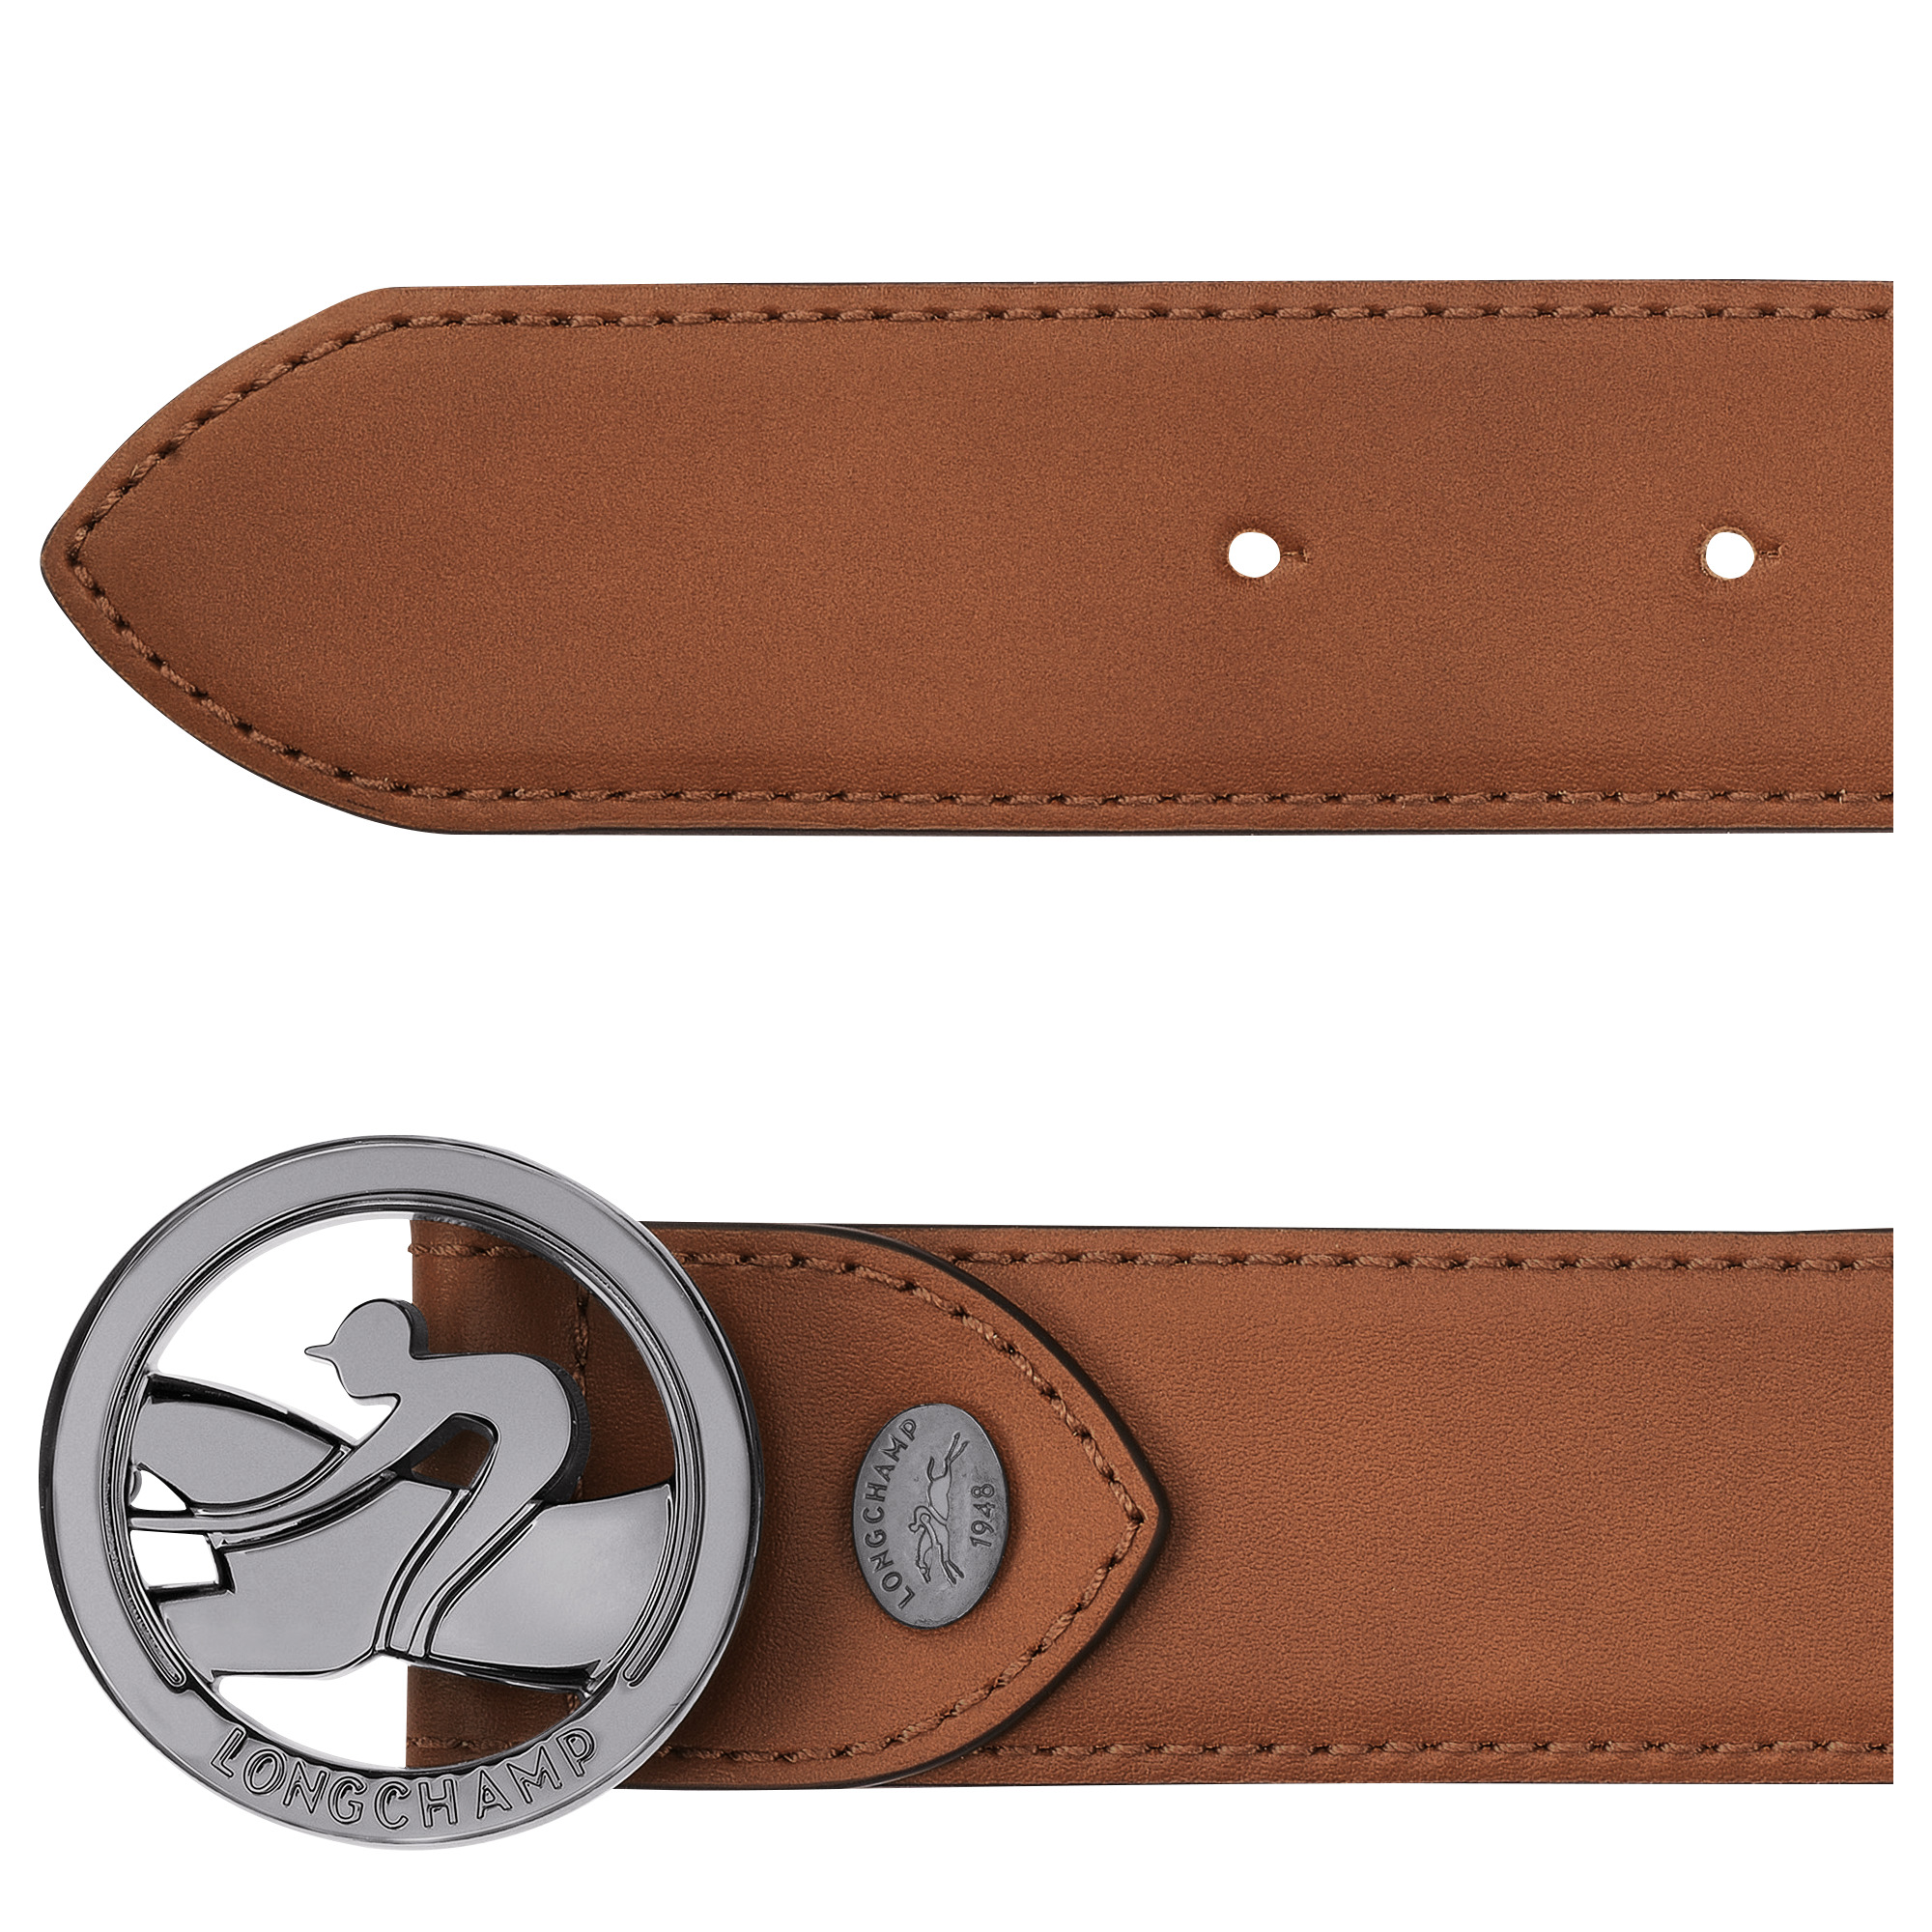 Box-Trot Men's belt Cognac - Leather - 2